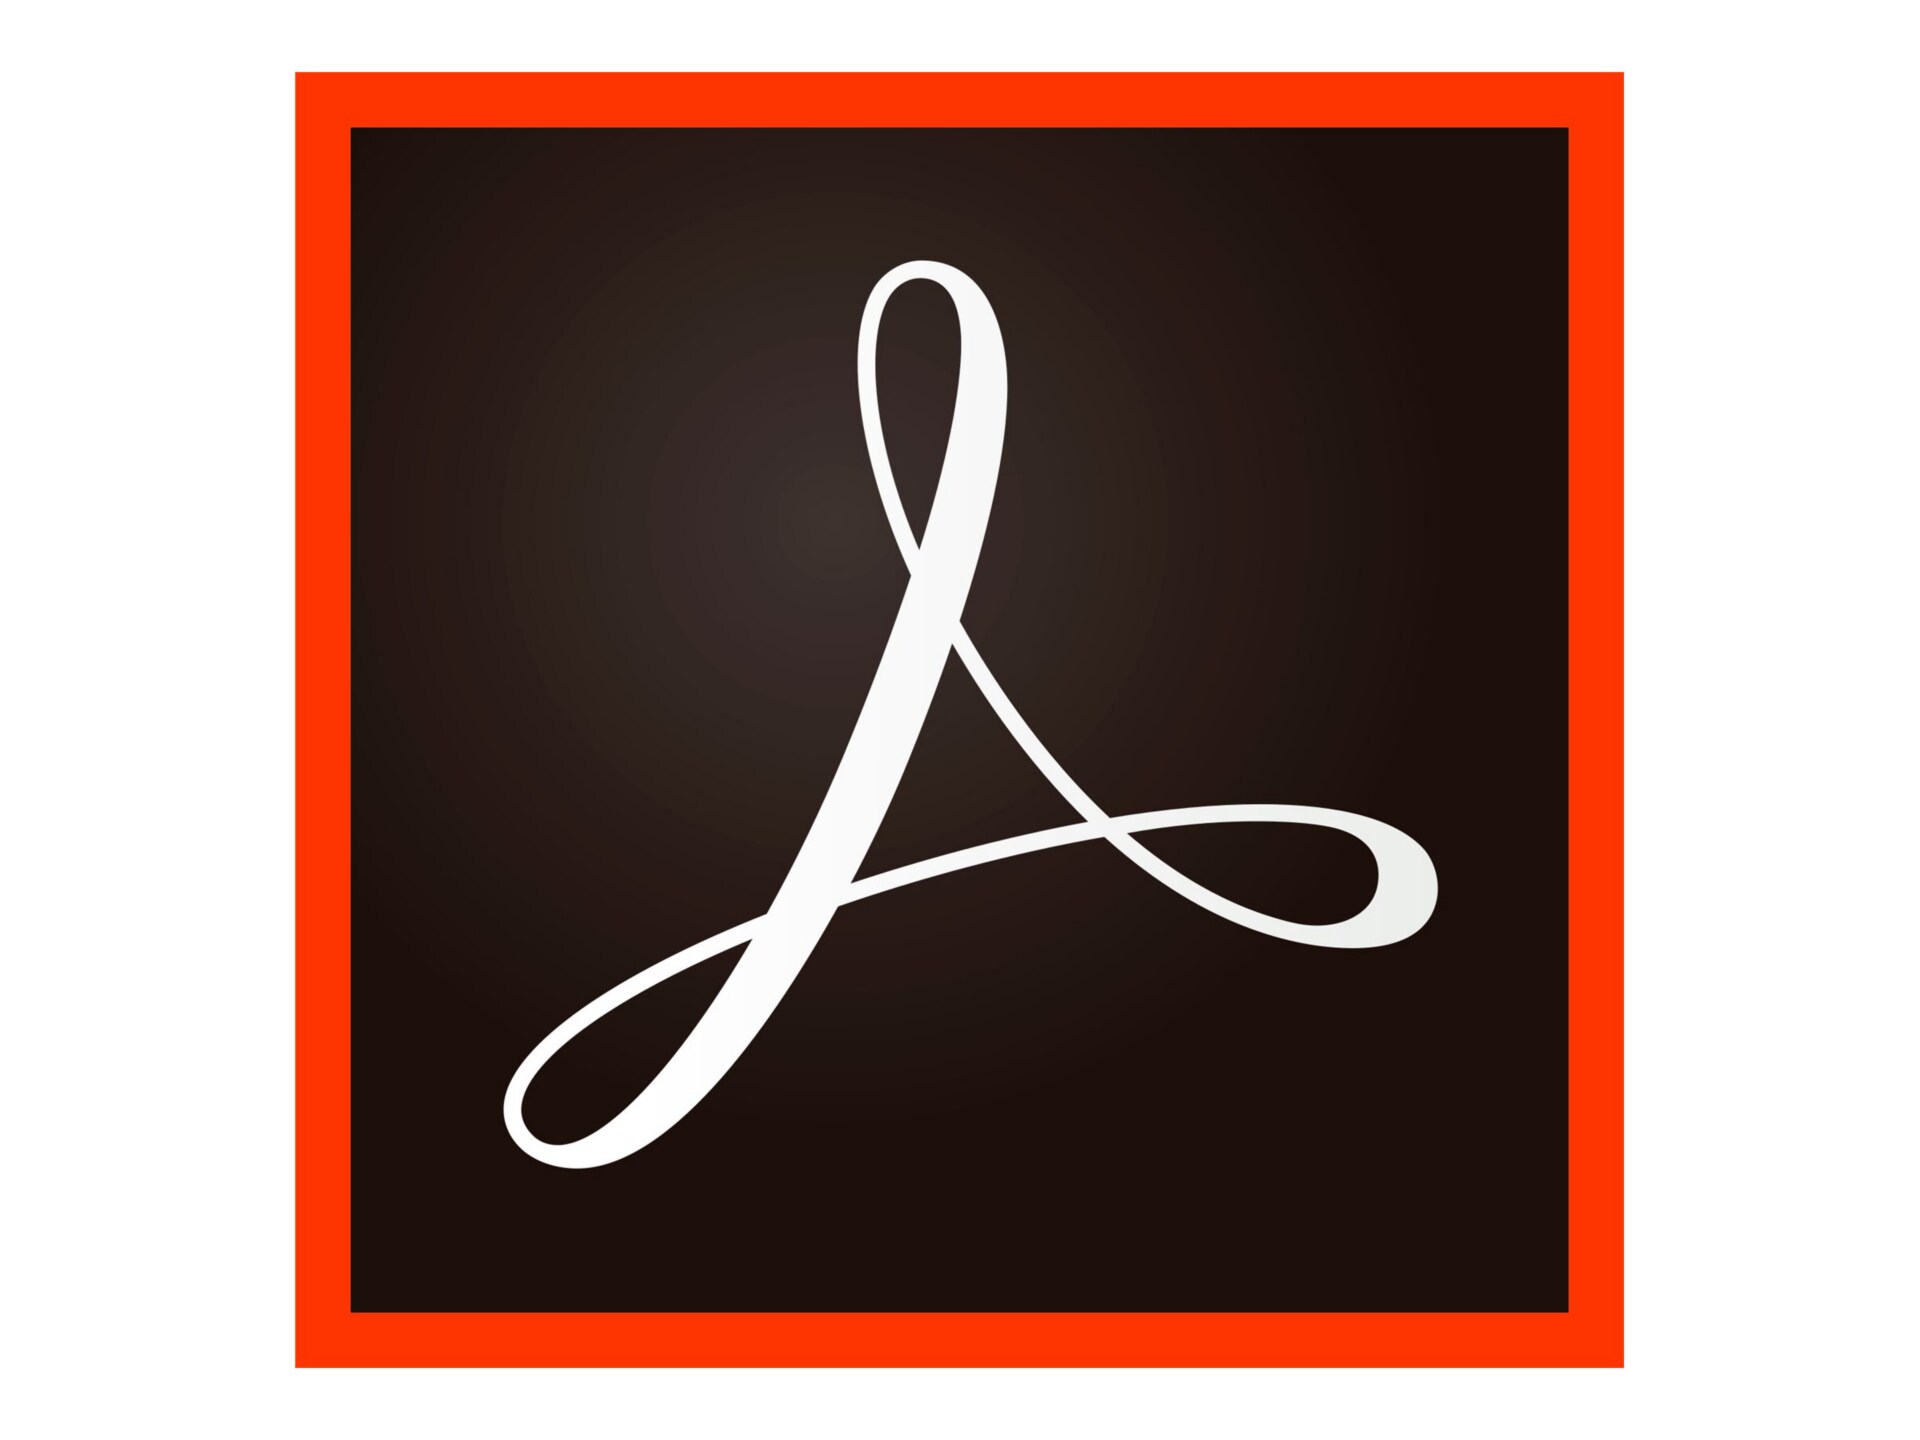 Adobe Acrobat Standard 2017 - media and documentation set